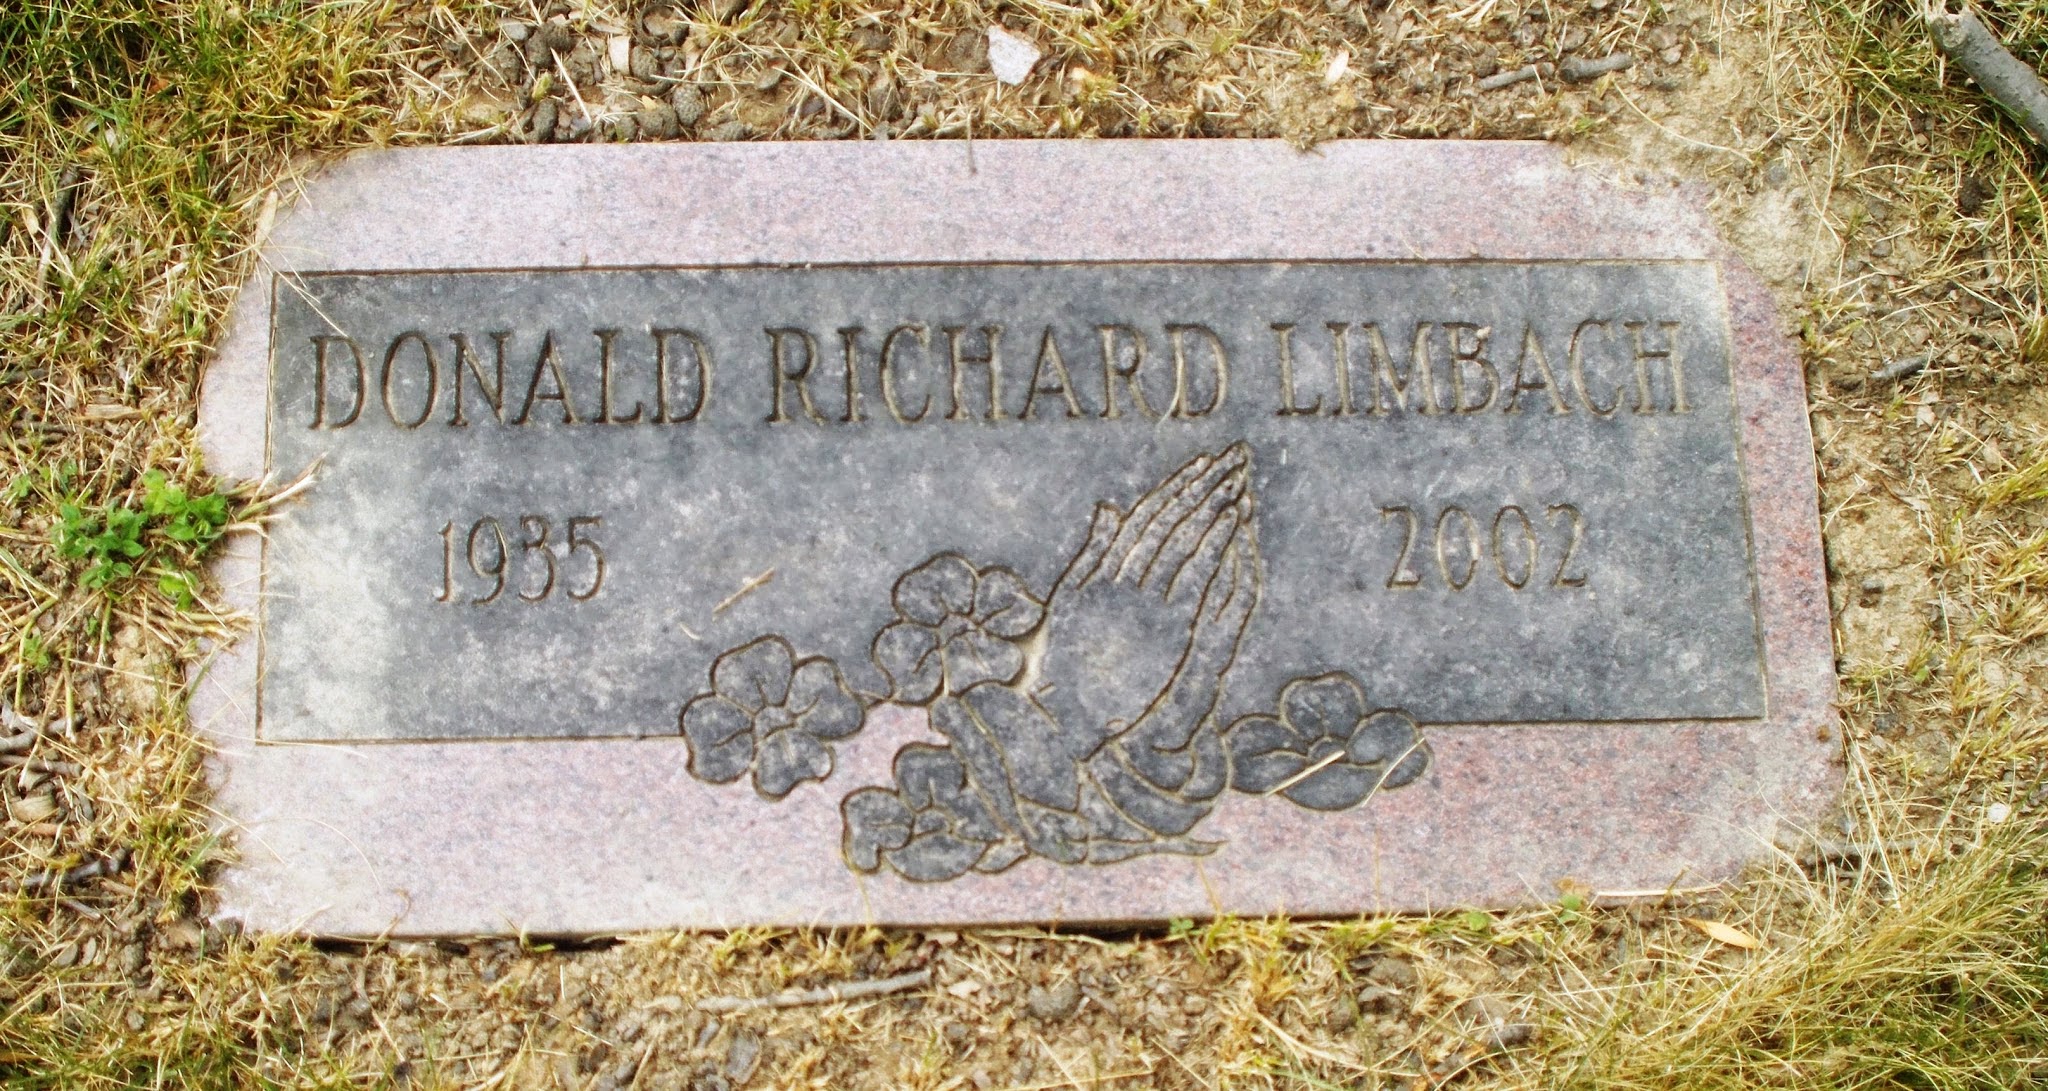 Donald Richard Limbach